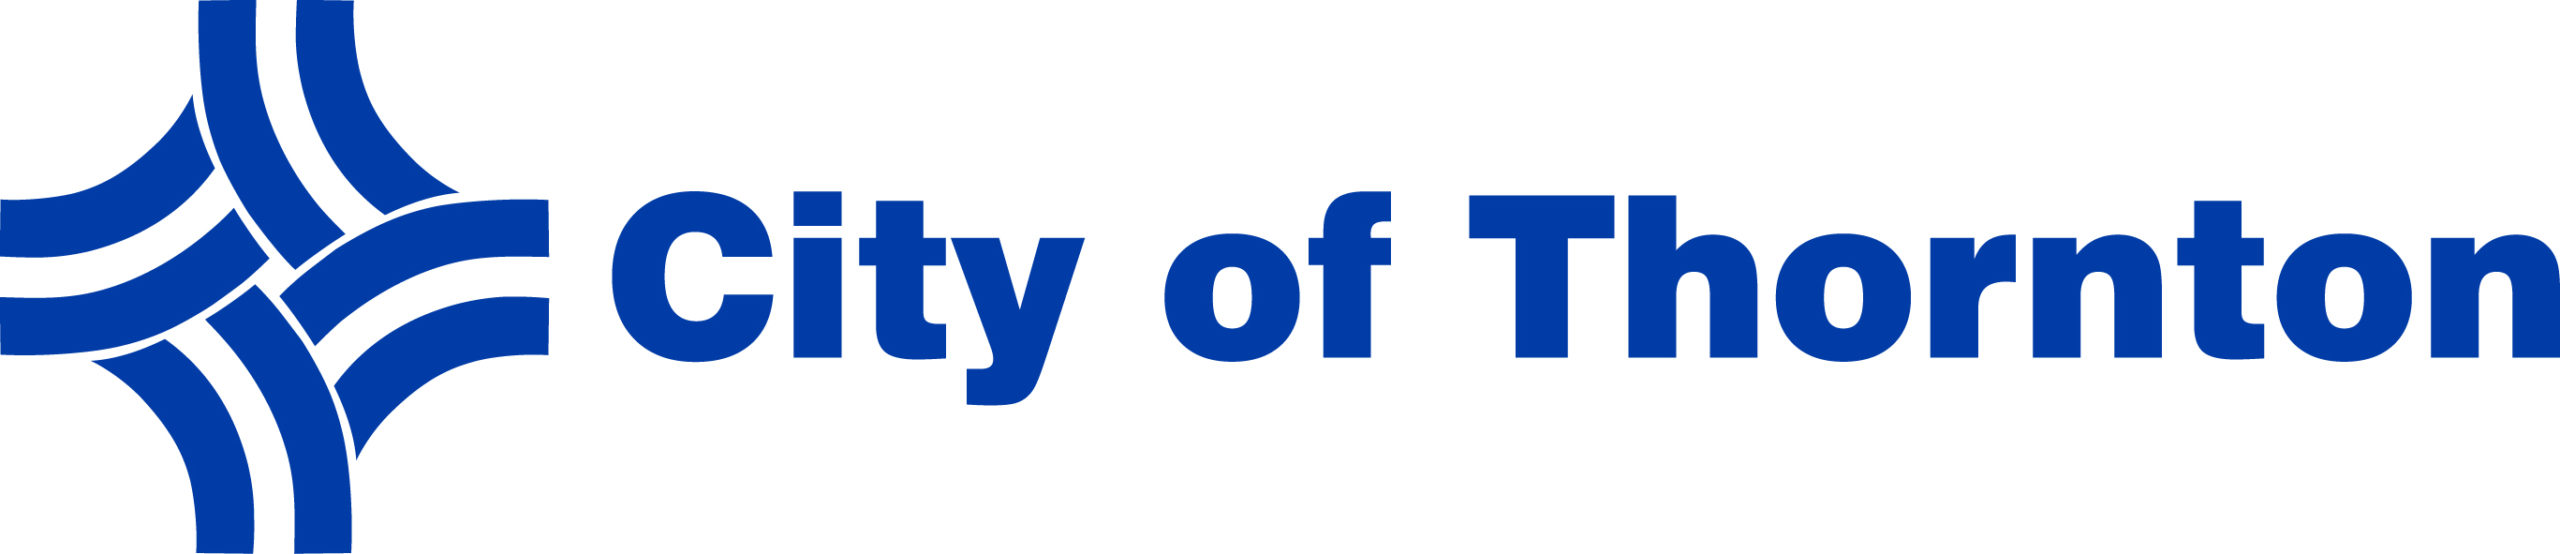 City of Thornton Colorado logo